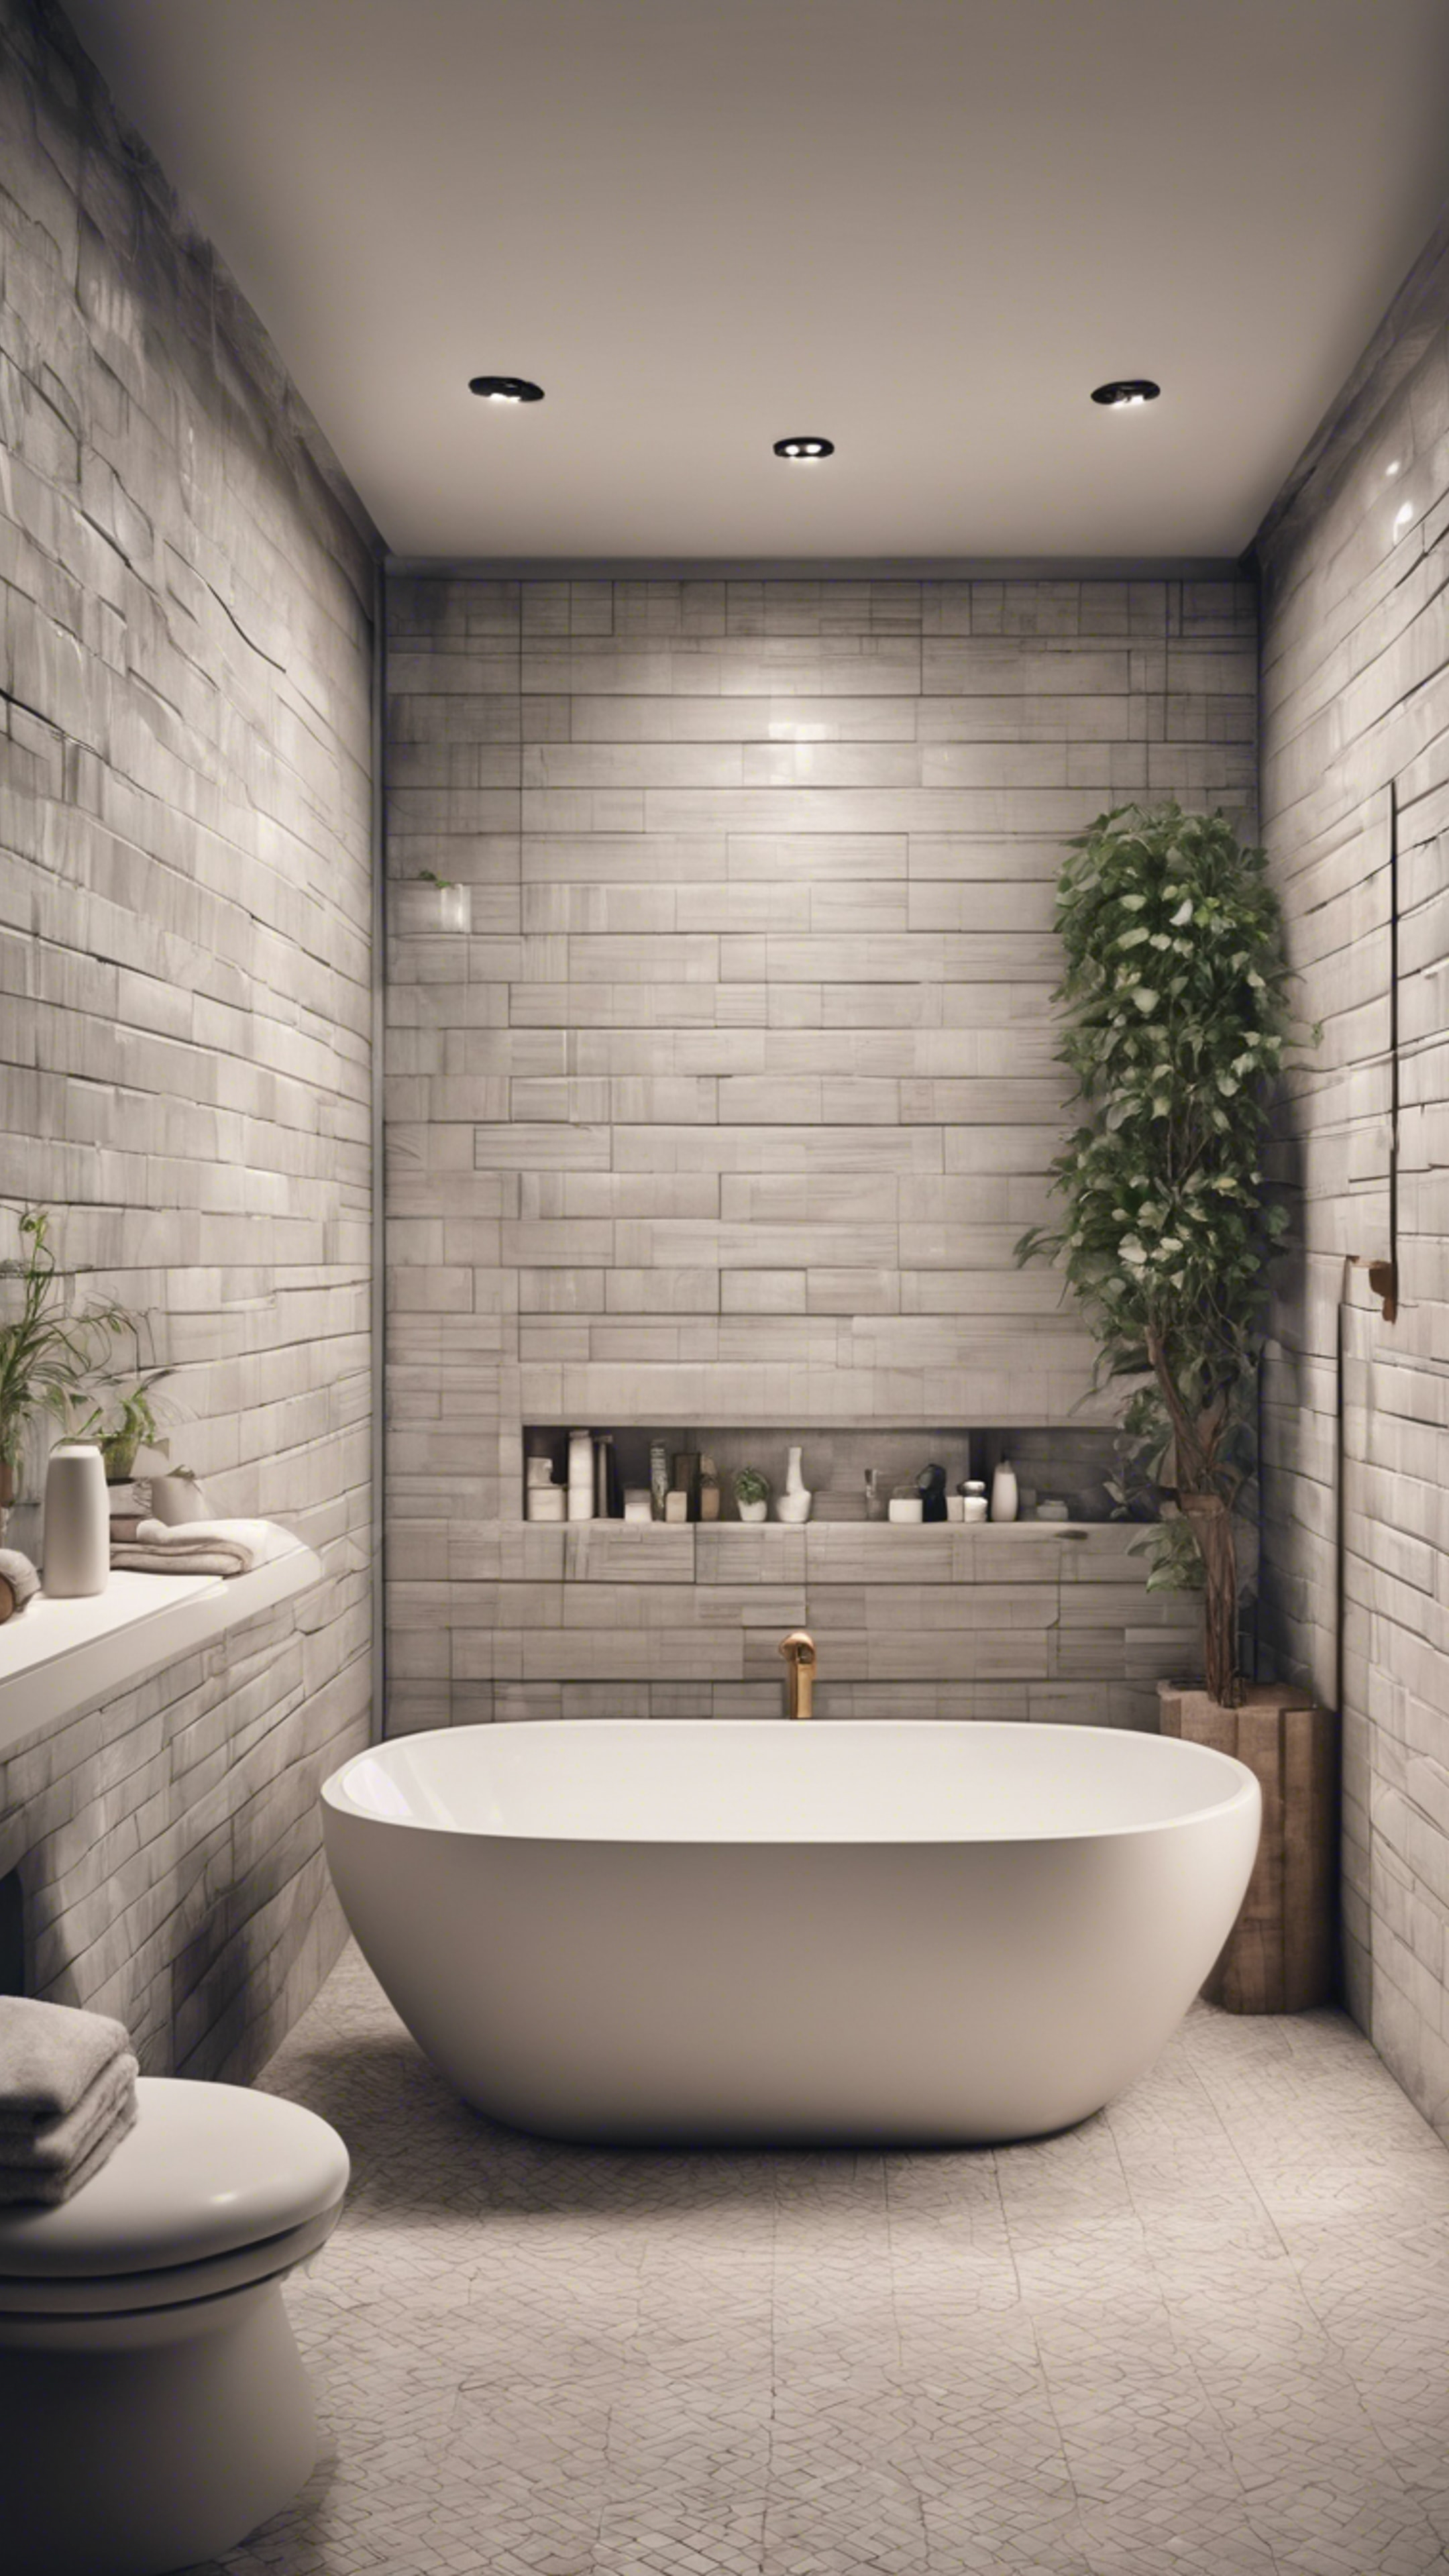 Minimalist modern bathroom interior with textured tile walls and a freestanding tub Wallpaper[2e1b0fa00a8c4569b9cd]